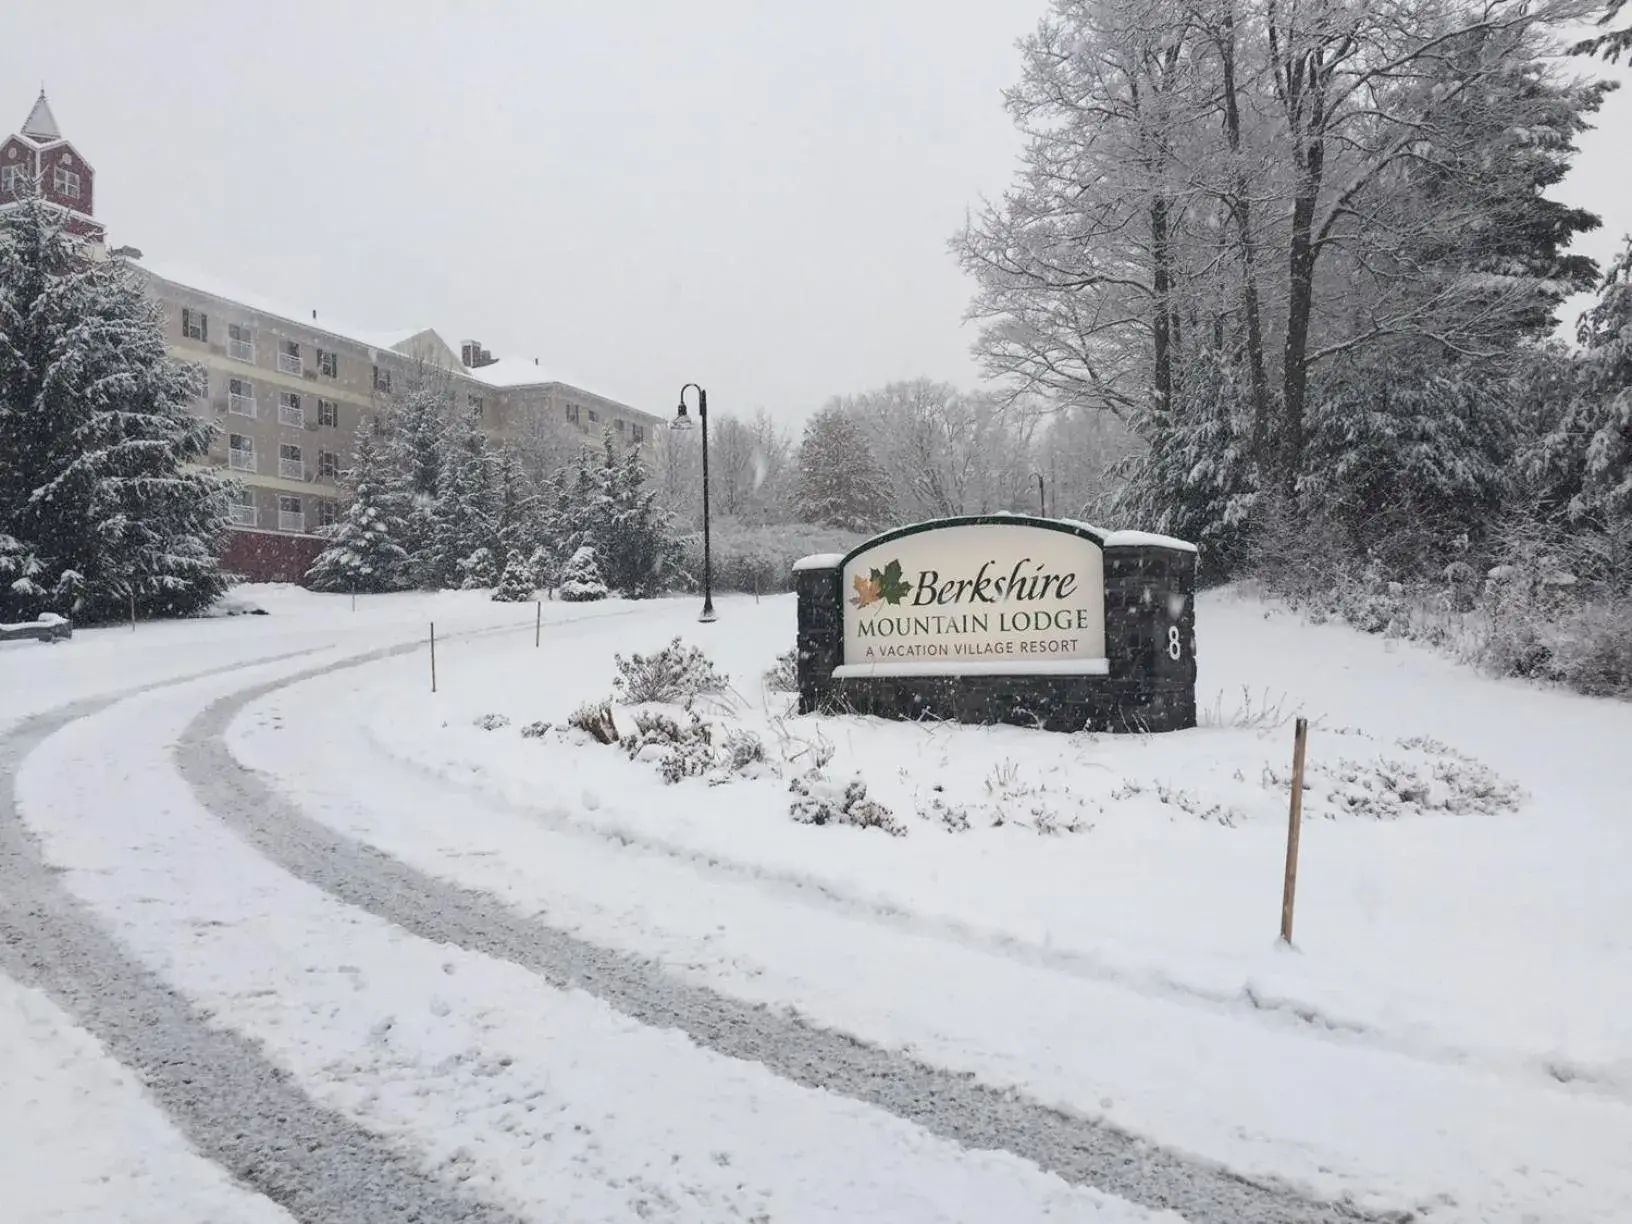 Day, Winter in Berkshire Mountain Lodge